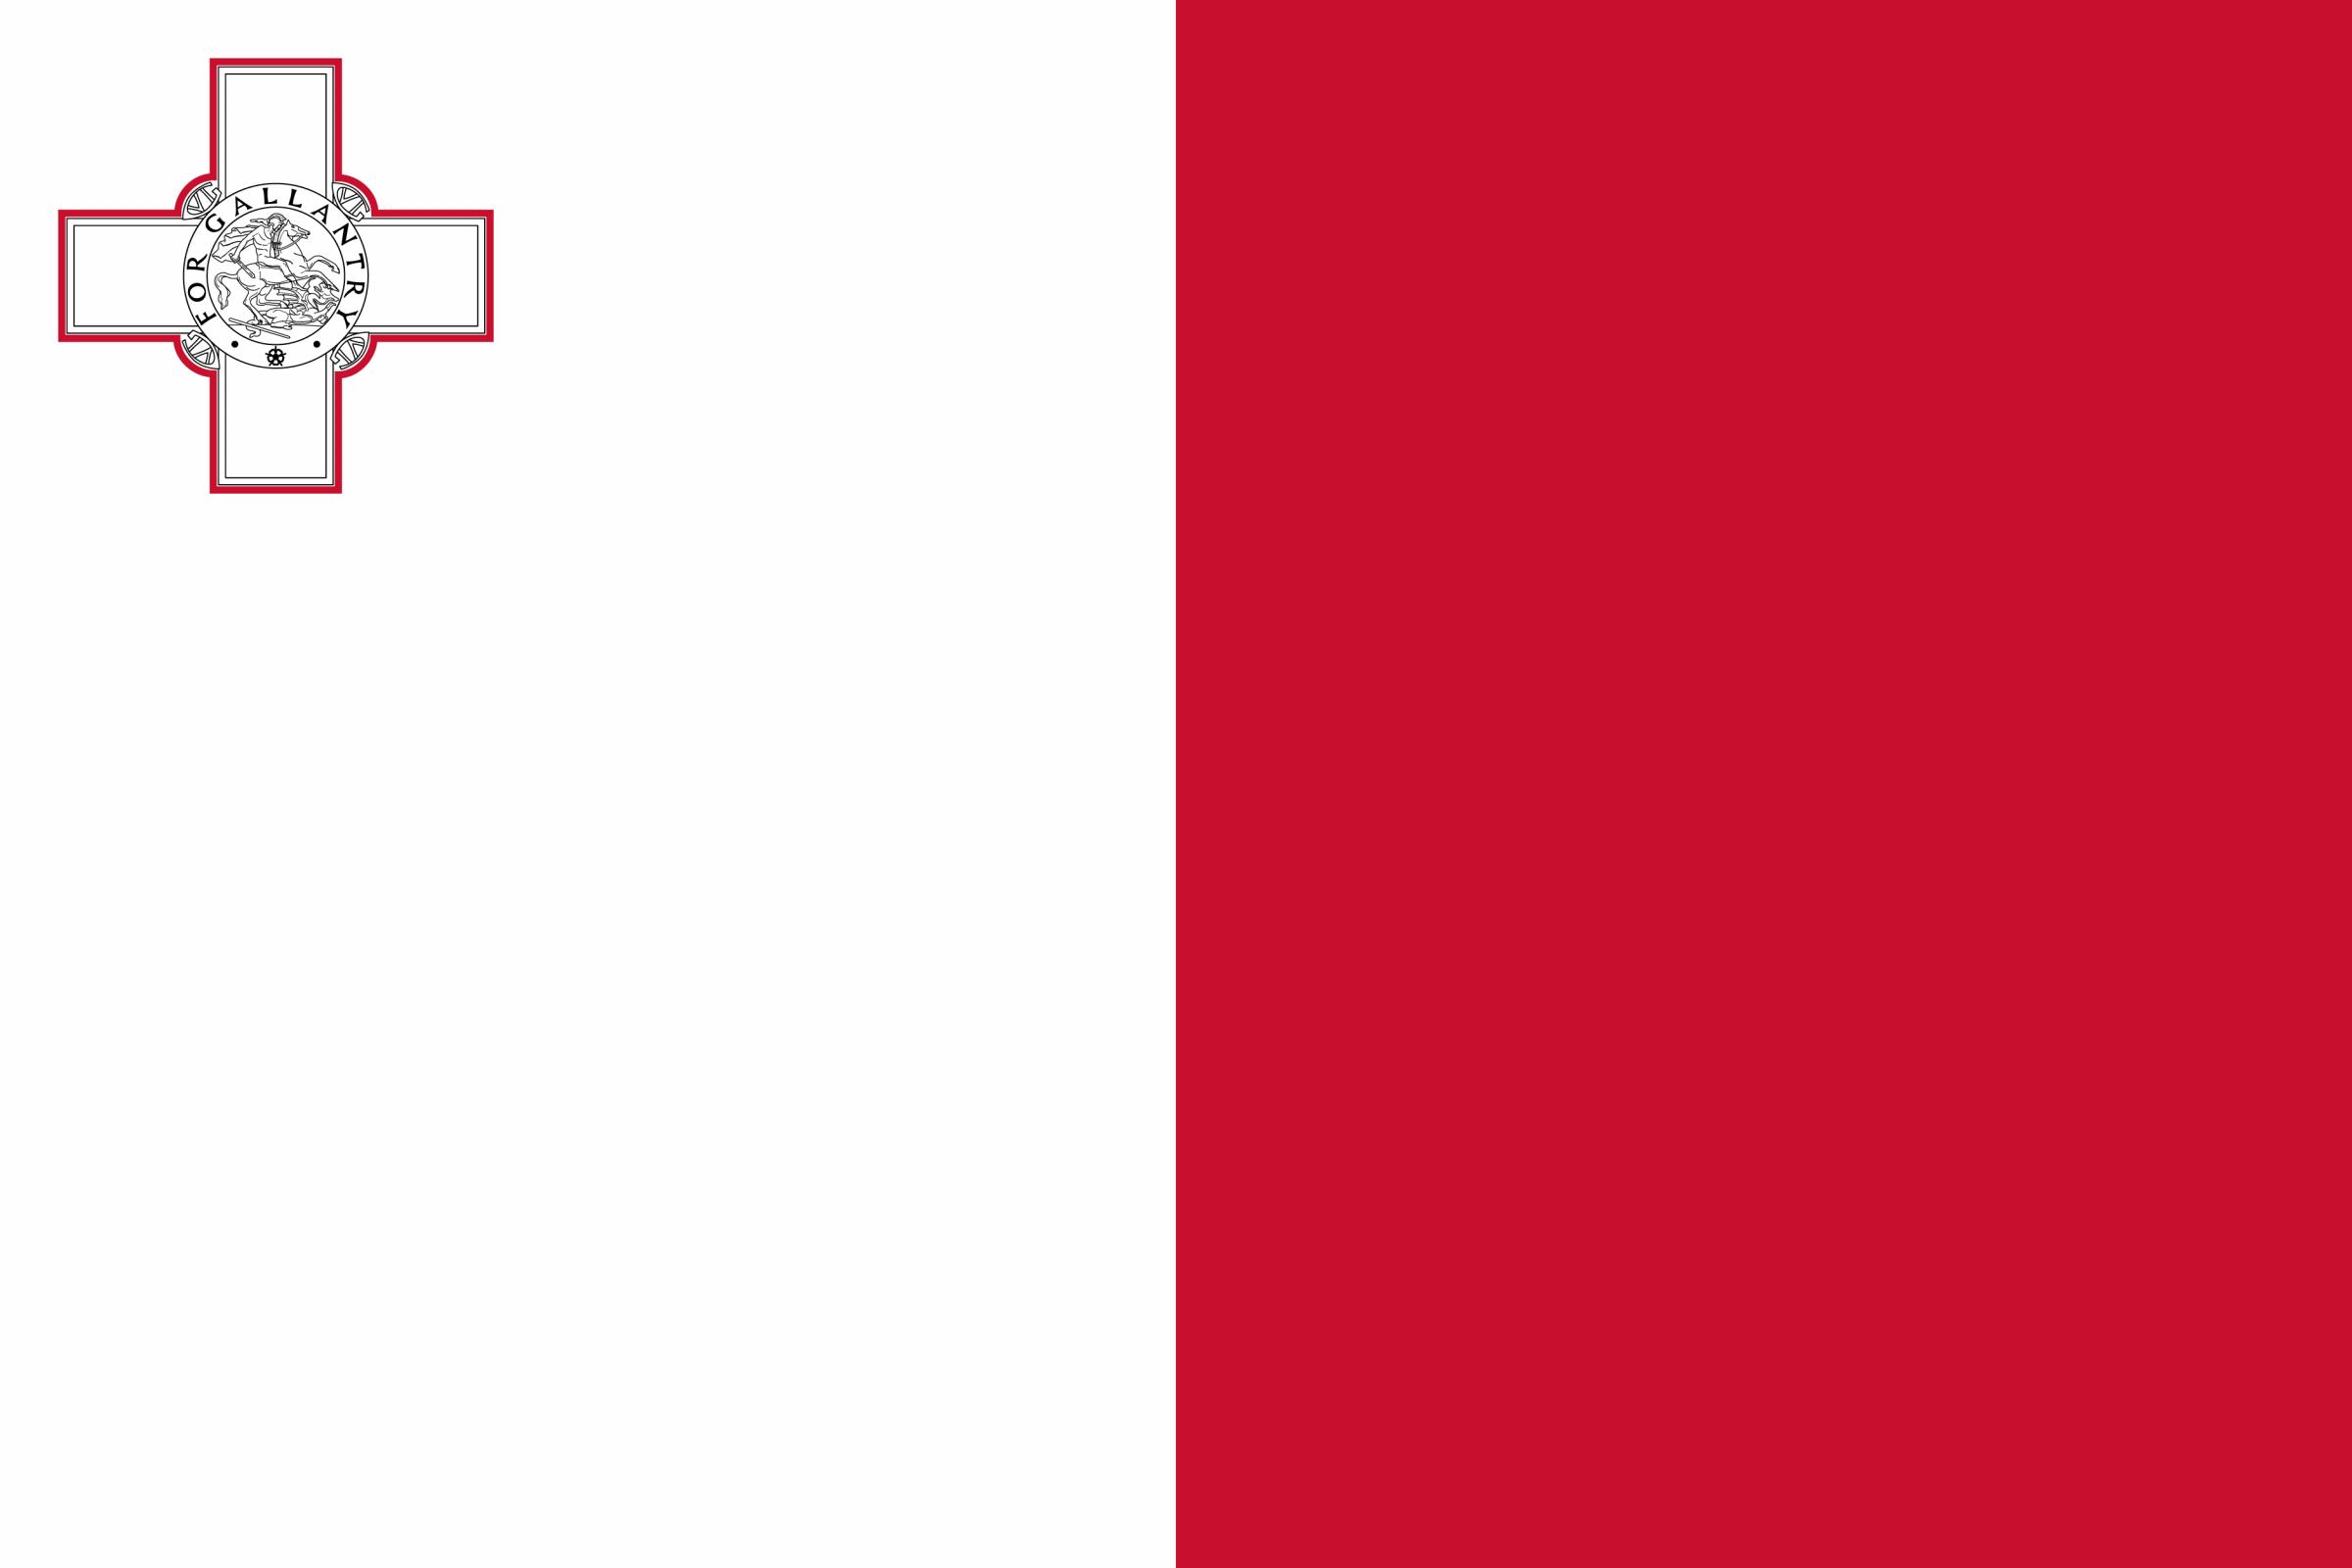 The flag of Malta.